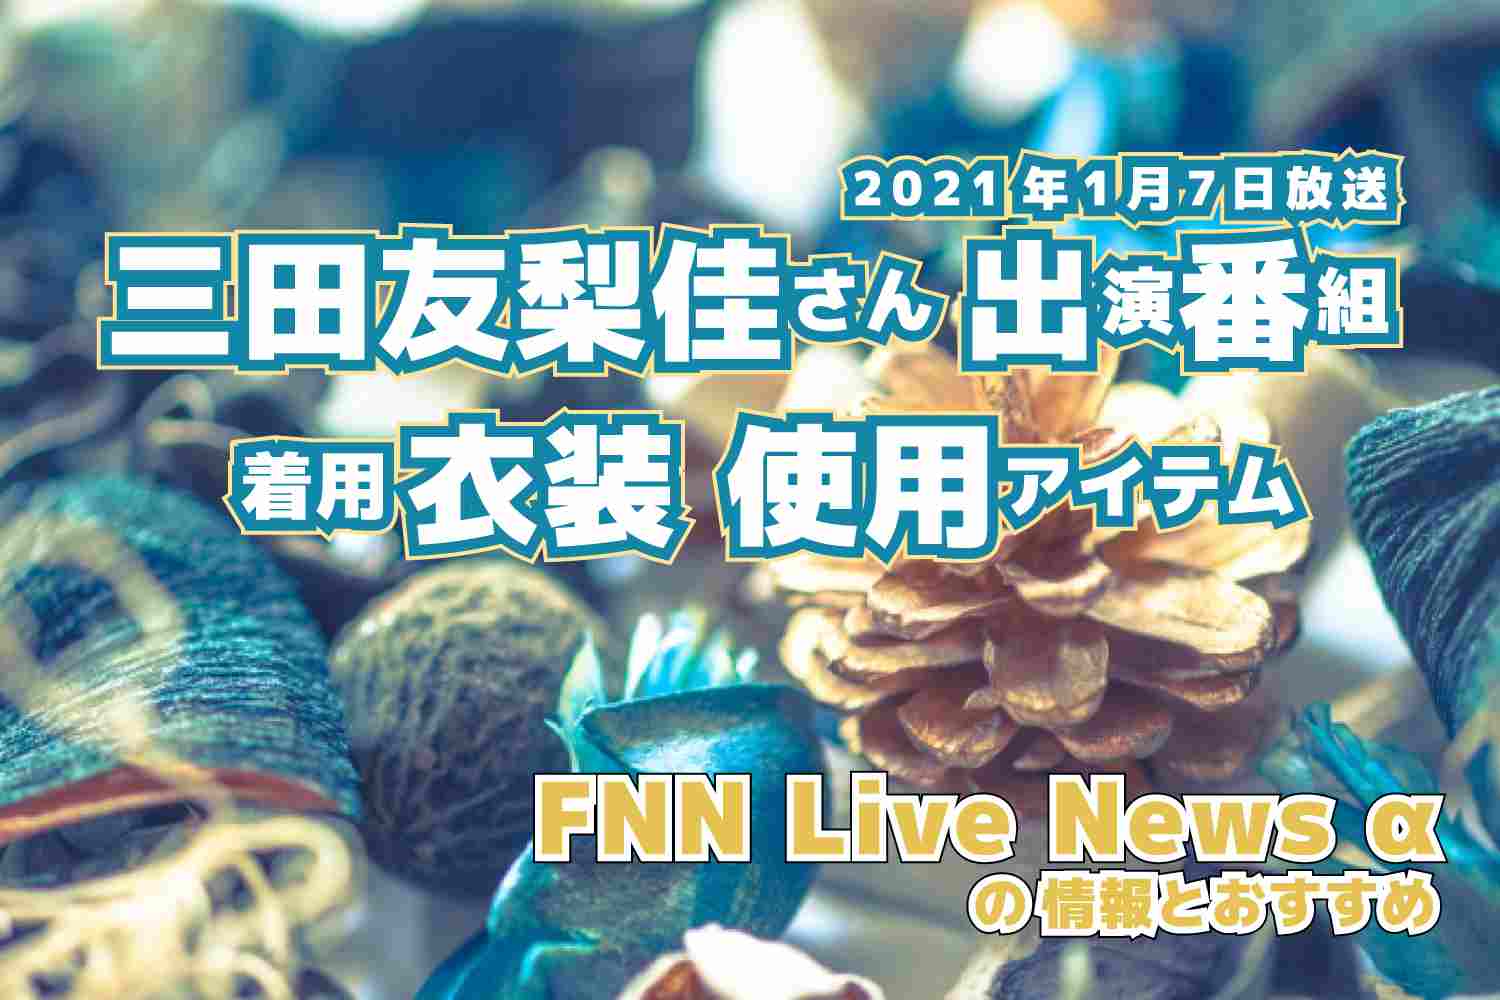 FNN Live News α　三田友梨佳さん 　衣装　2021年1月7日放送